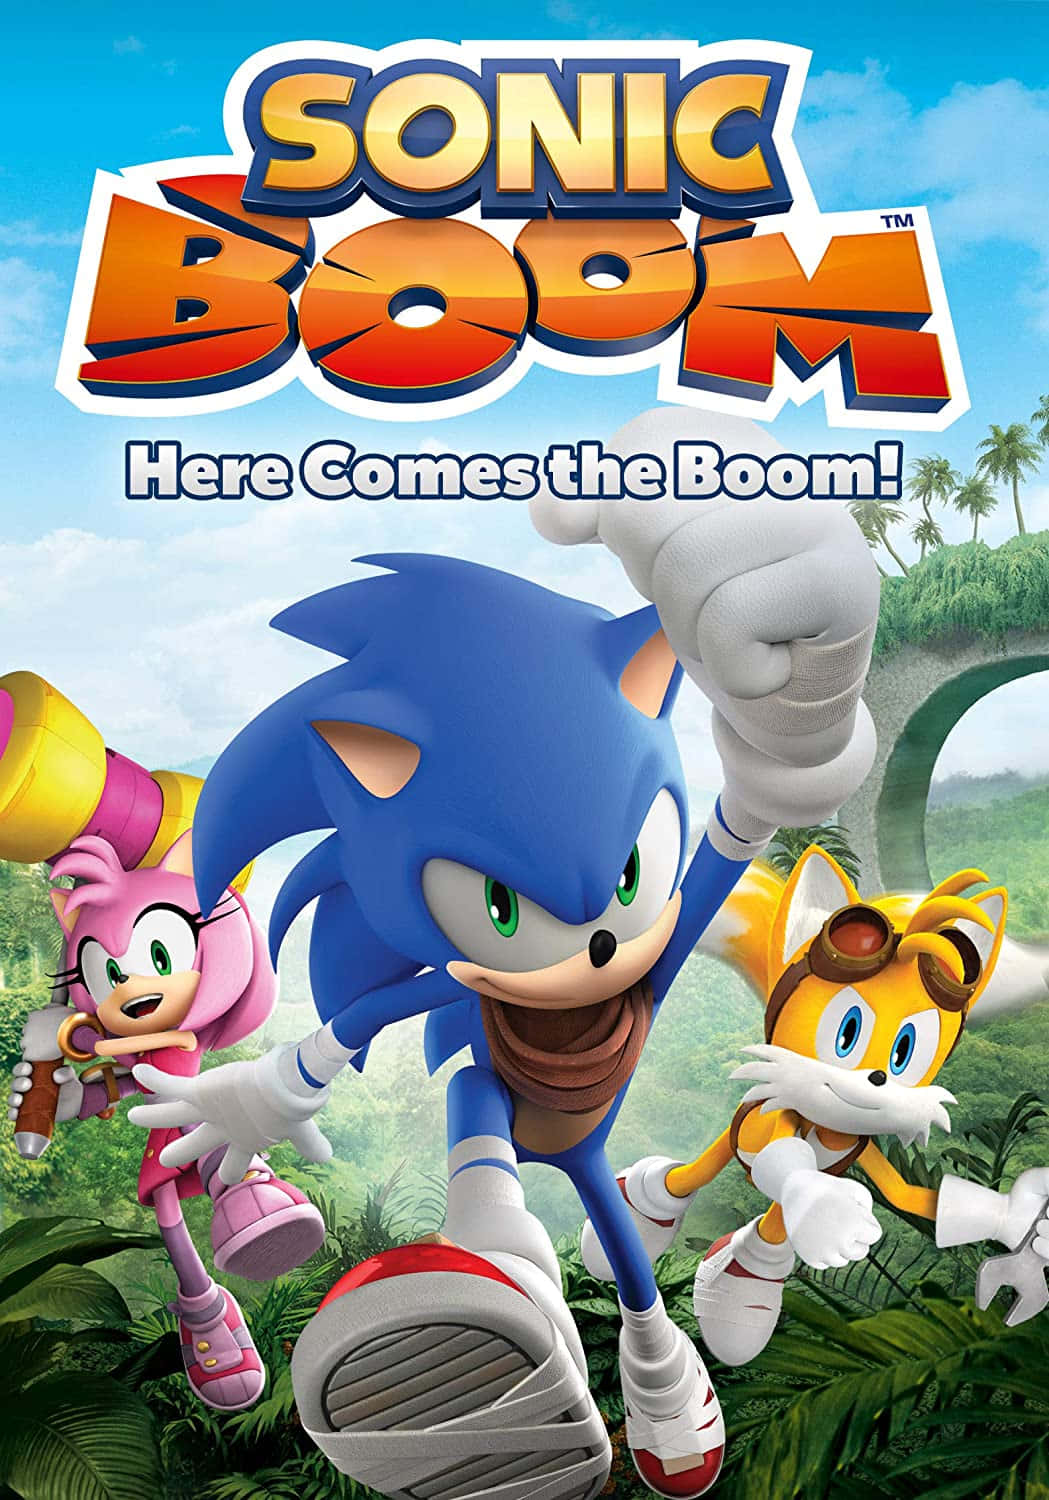 Sonic Boom in Action Wallpaper